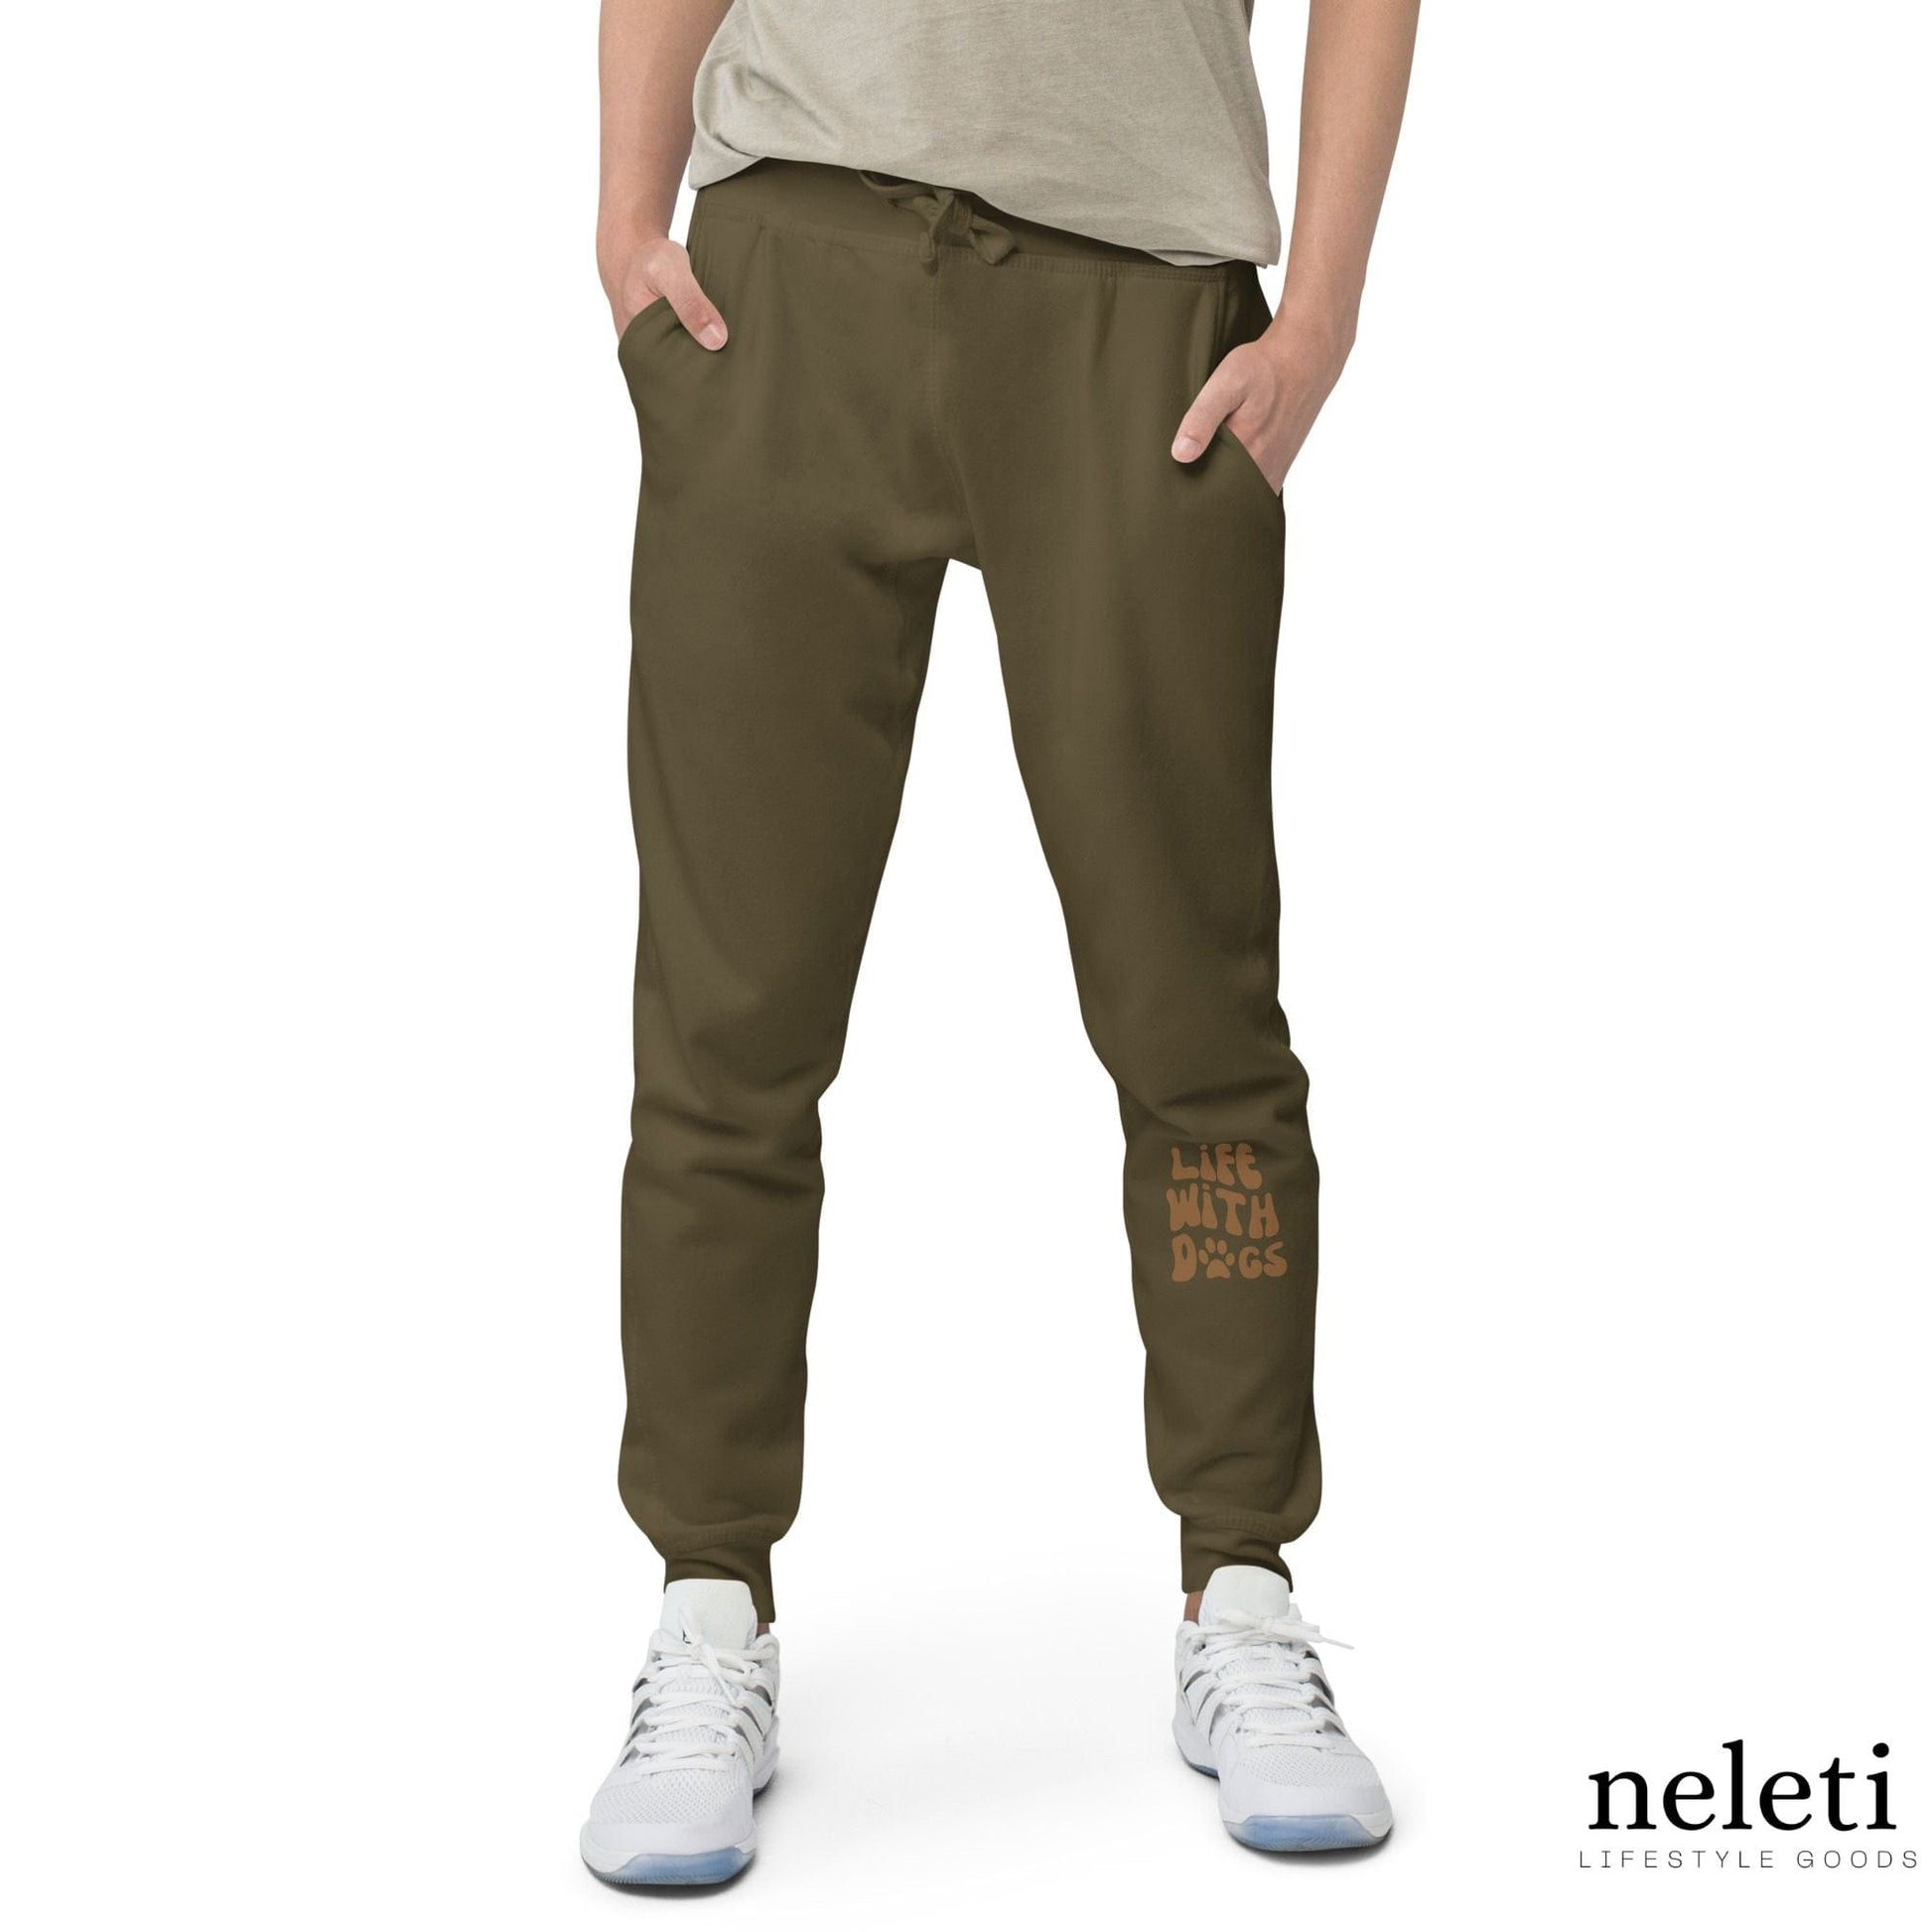    neleti.com-Military-Green-Fleece-Sweatpants